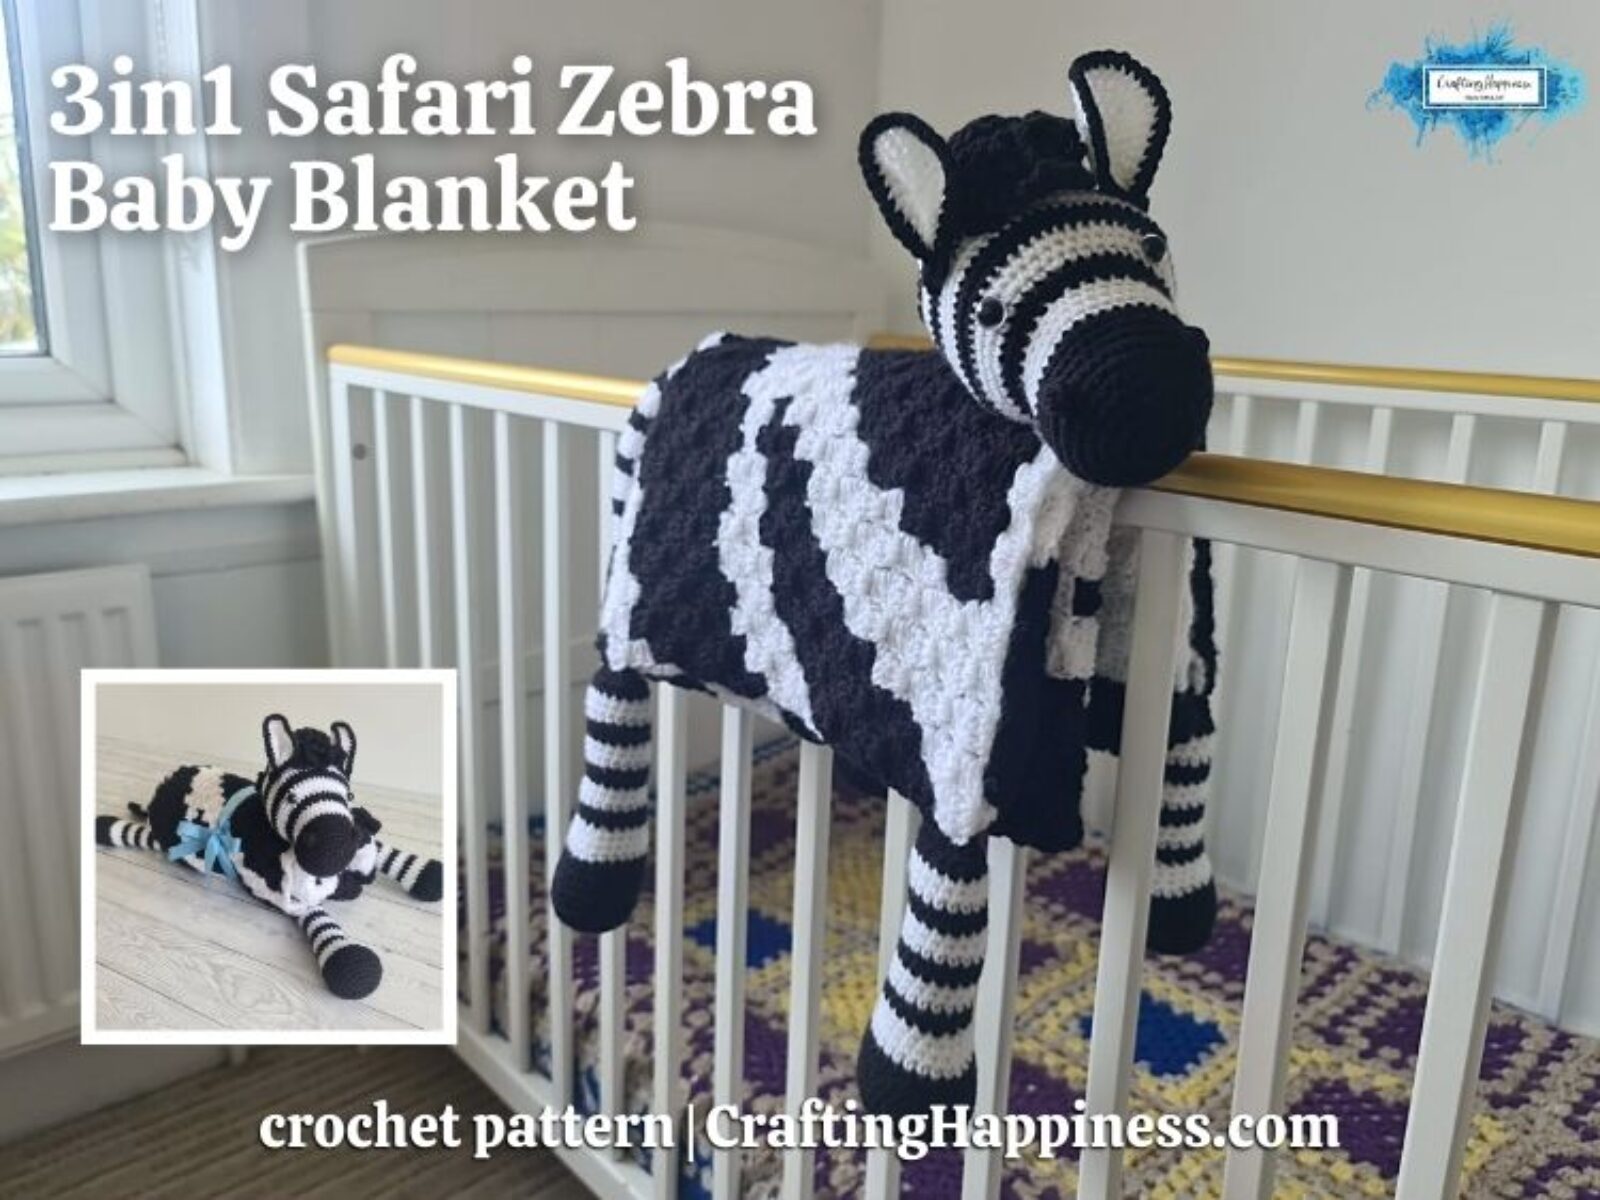 FACEBOOK BLOG POSTER - 3in1 Safari Zebra Baby Blanket Crafting Happiness